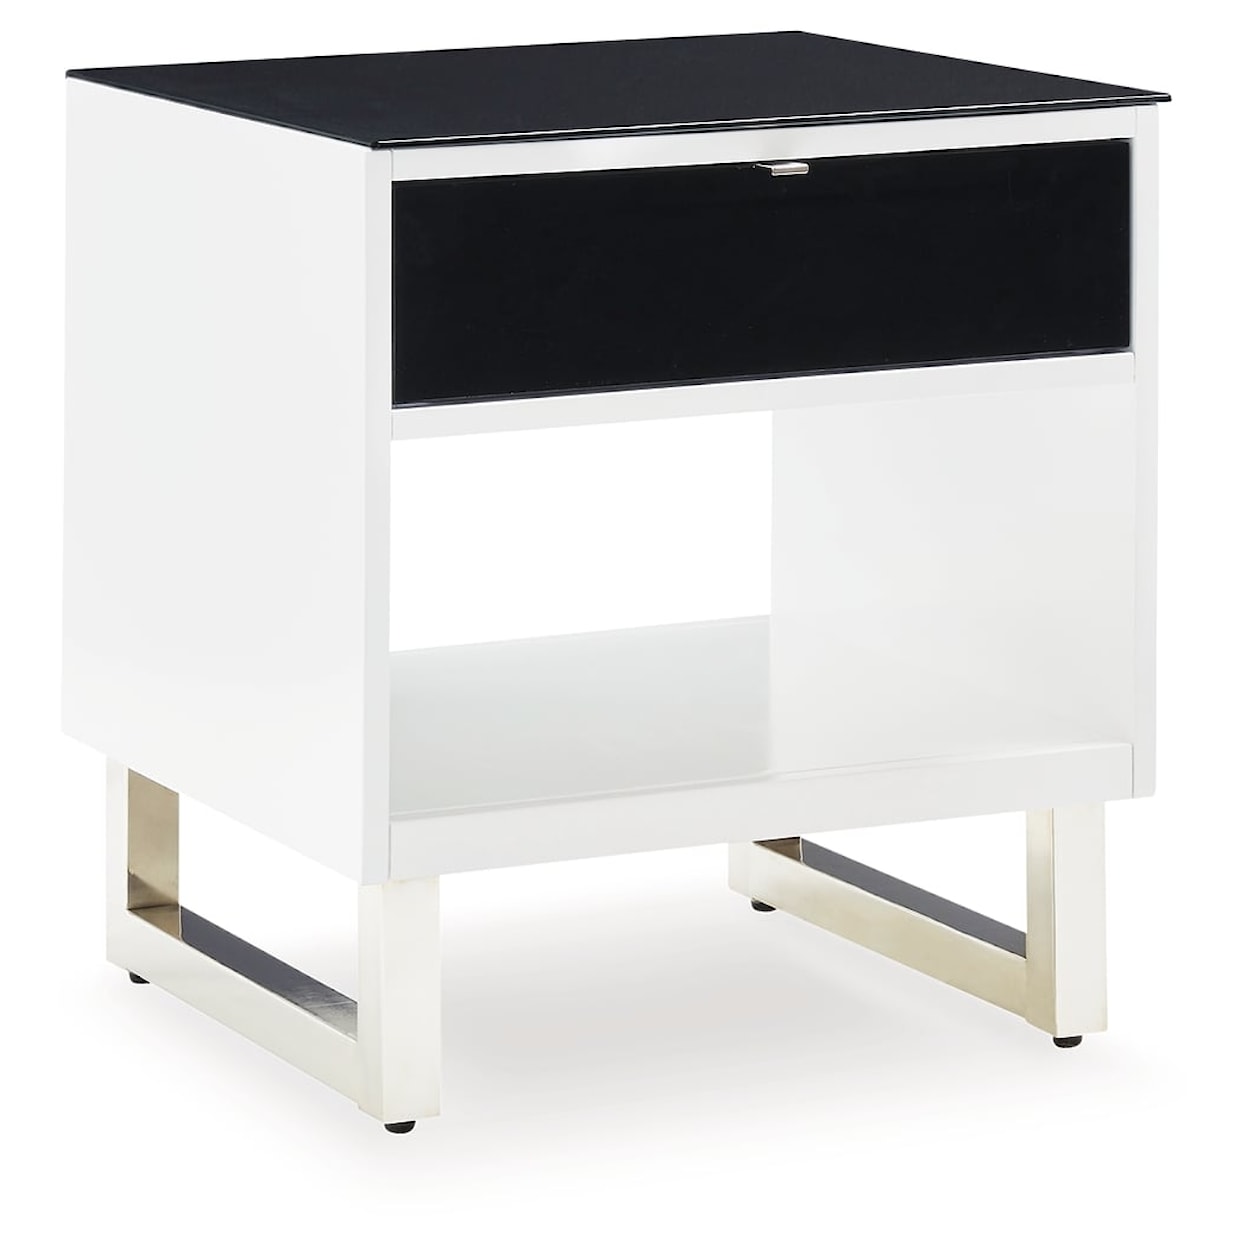 Ashley Furniture Signature Design Gardoni Rectangular End Table